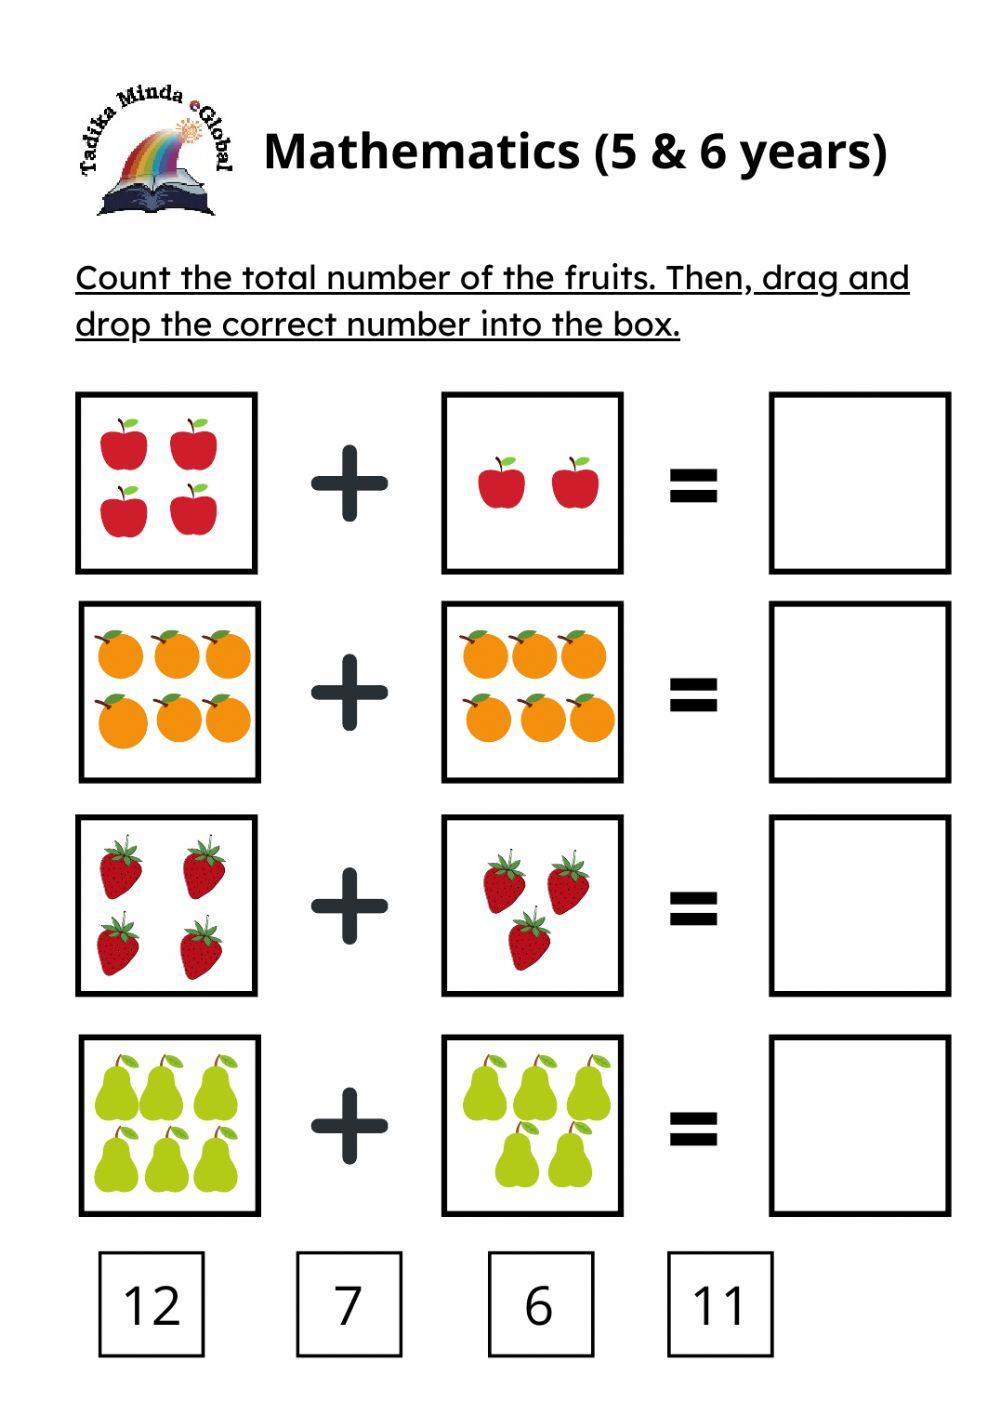 Mathematics 5 & 6 Years Old: Fruits 1